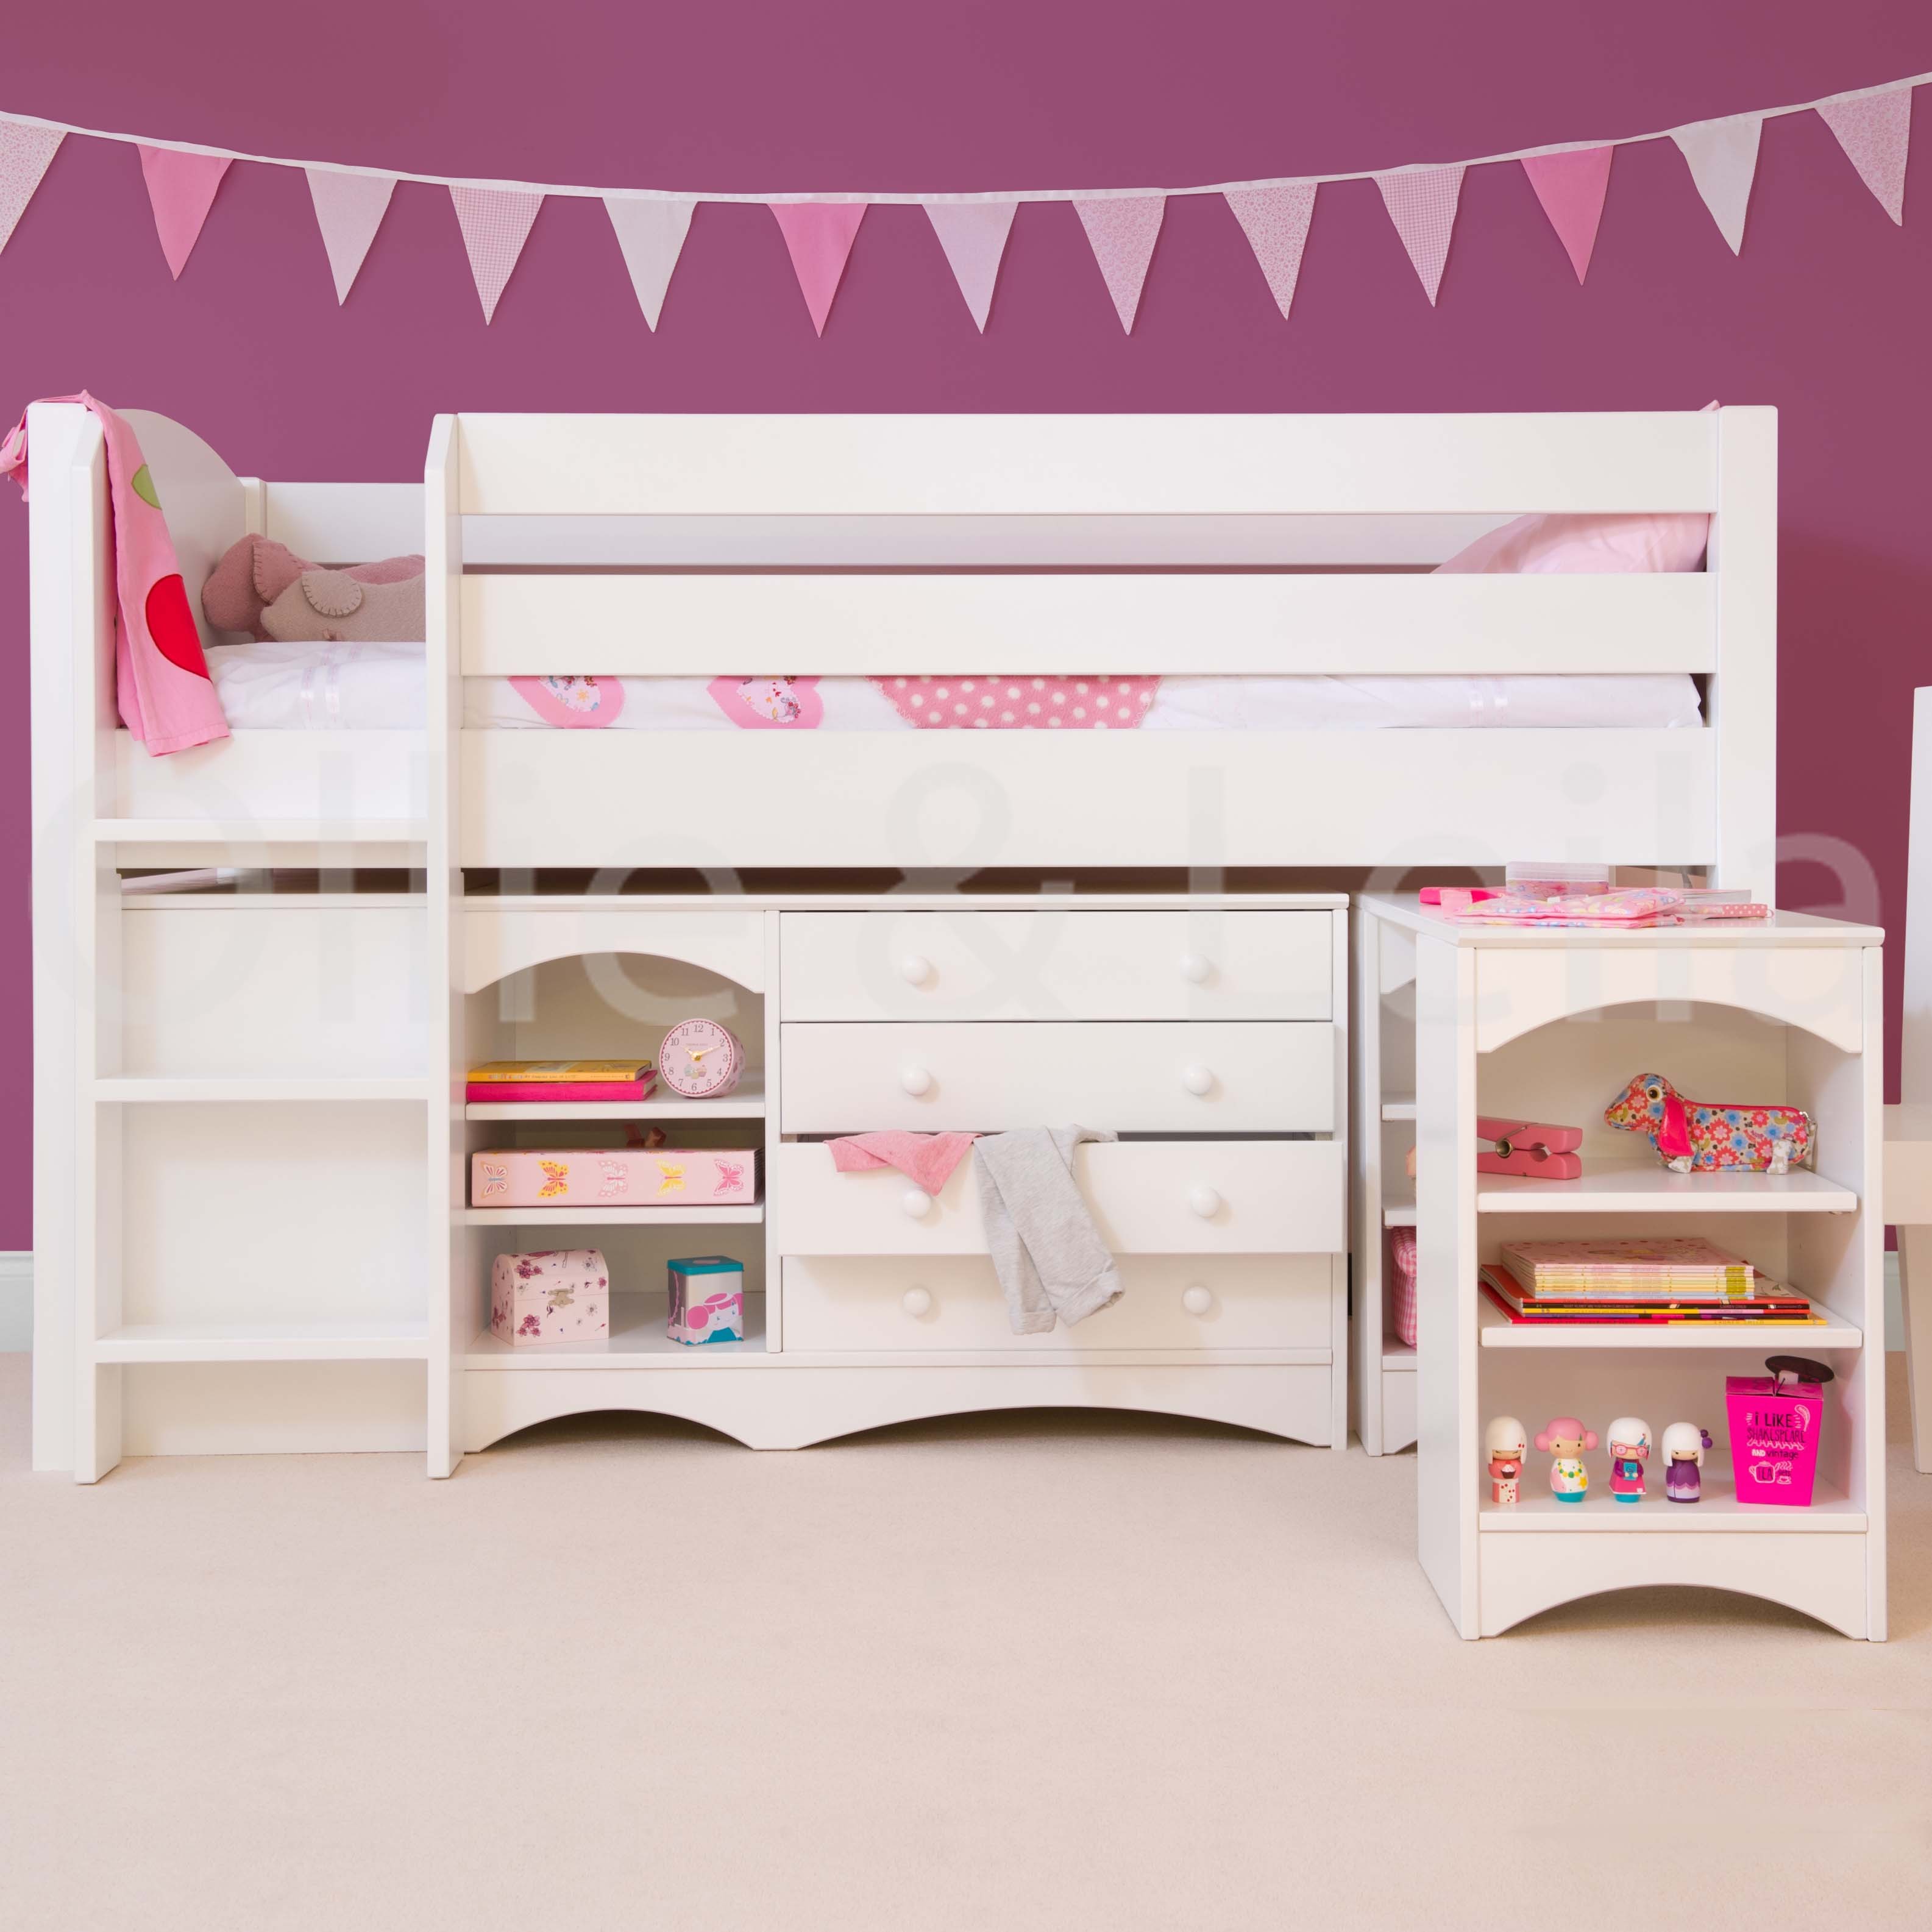 childrens bedroom soft furnishings